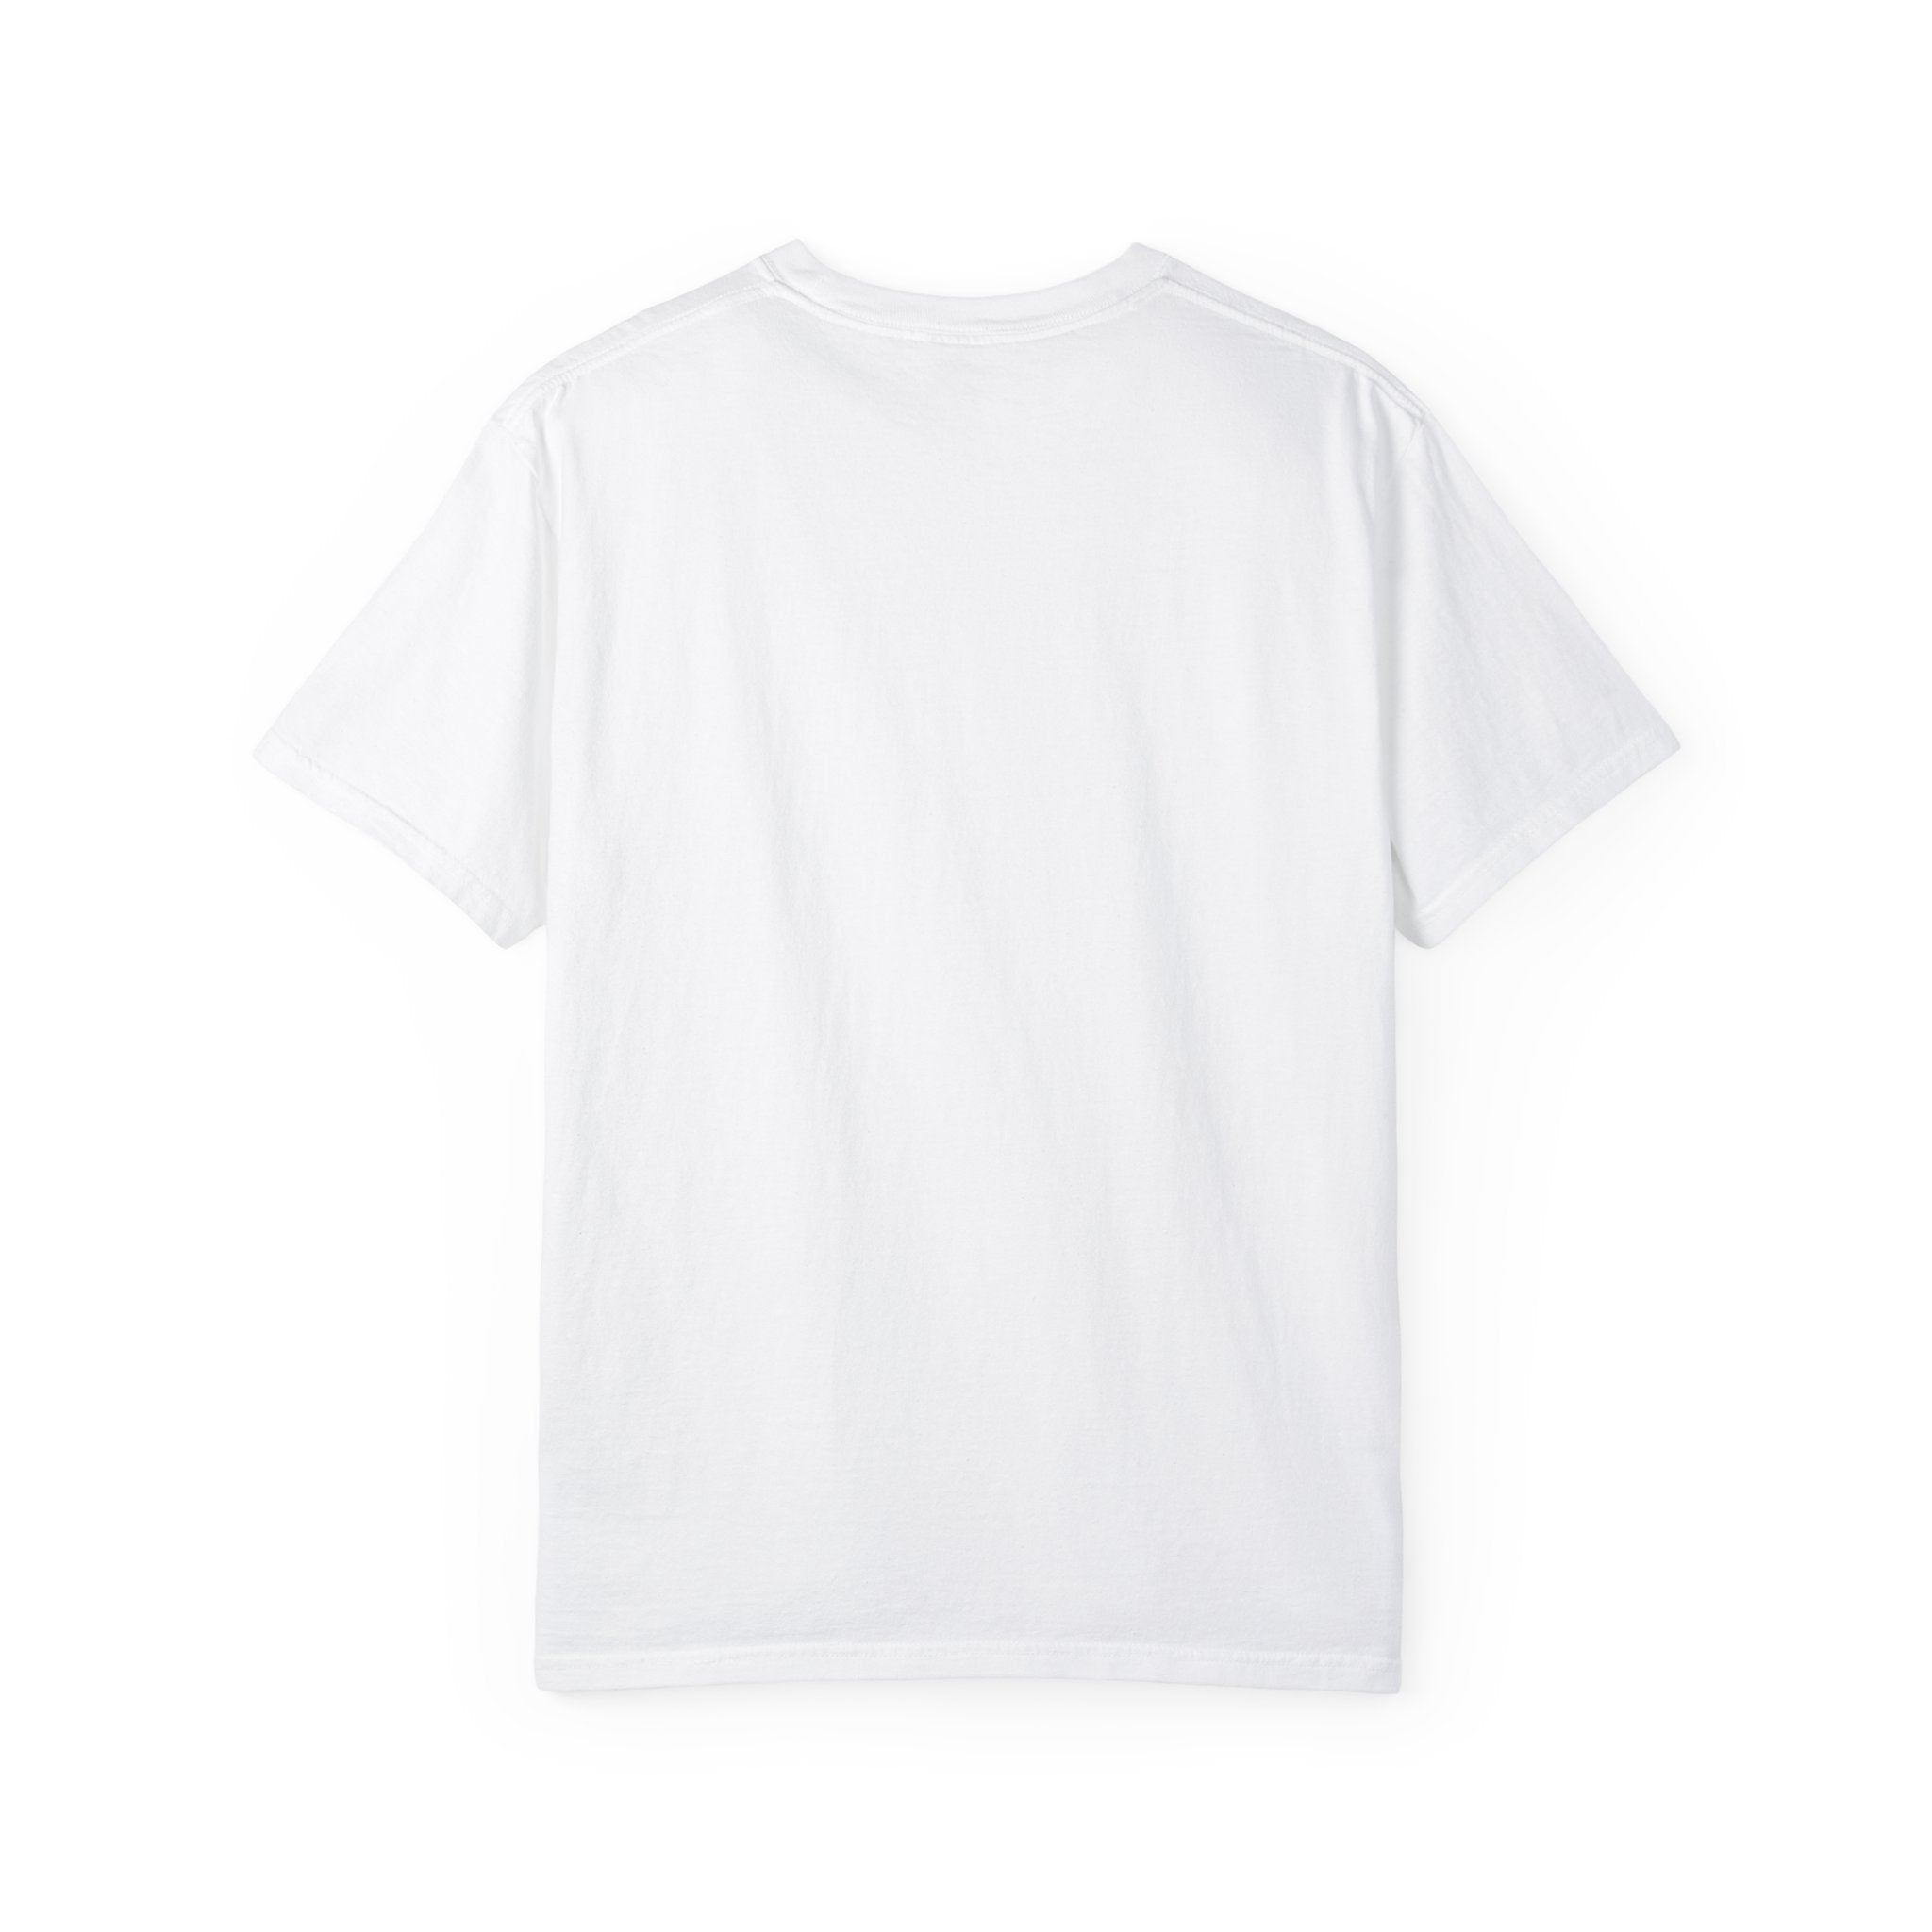 I Am Black history Month Unisex Garment-Dyed T-shirt